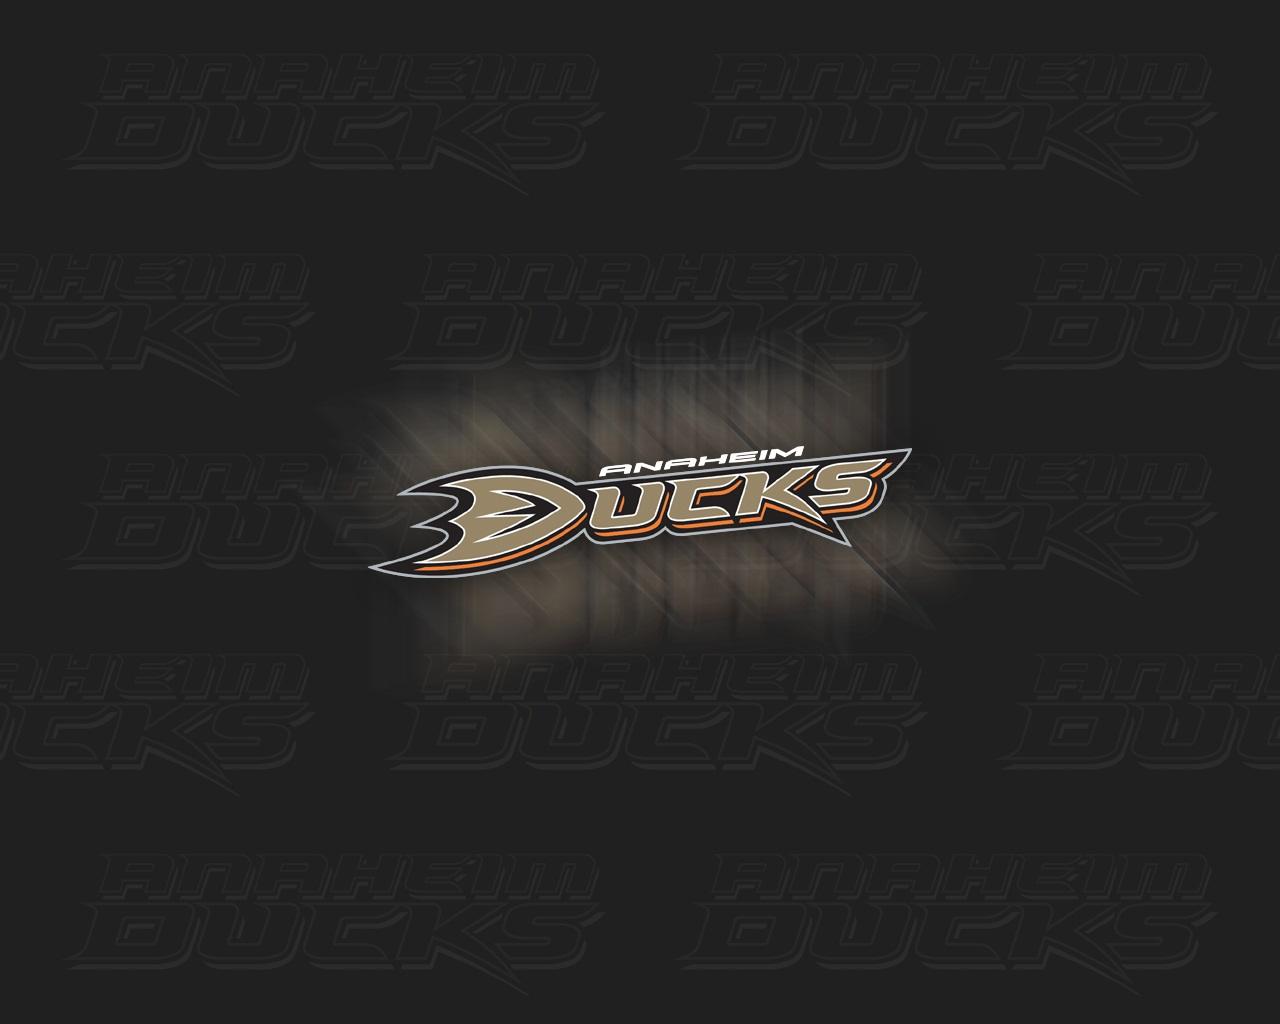 Anaheim Ducks Wallpaper 1280x1024 px, #Q5S349T